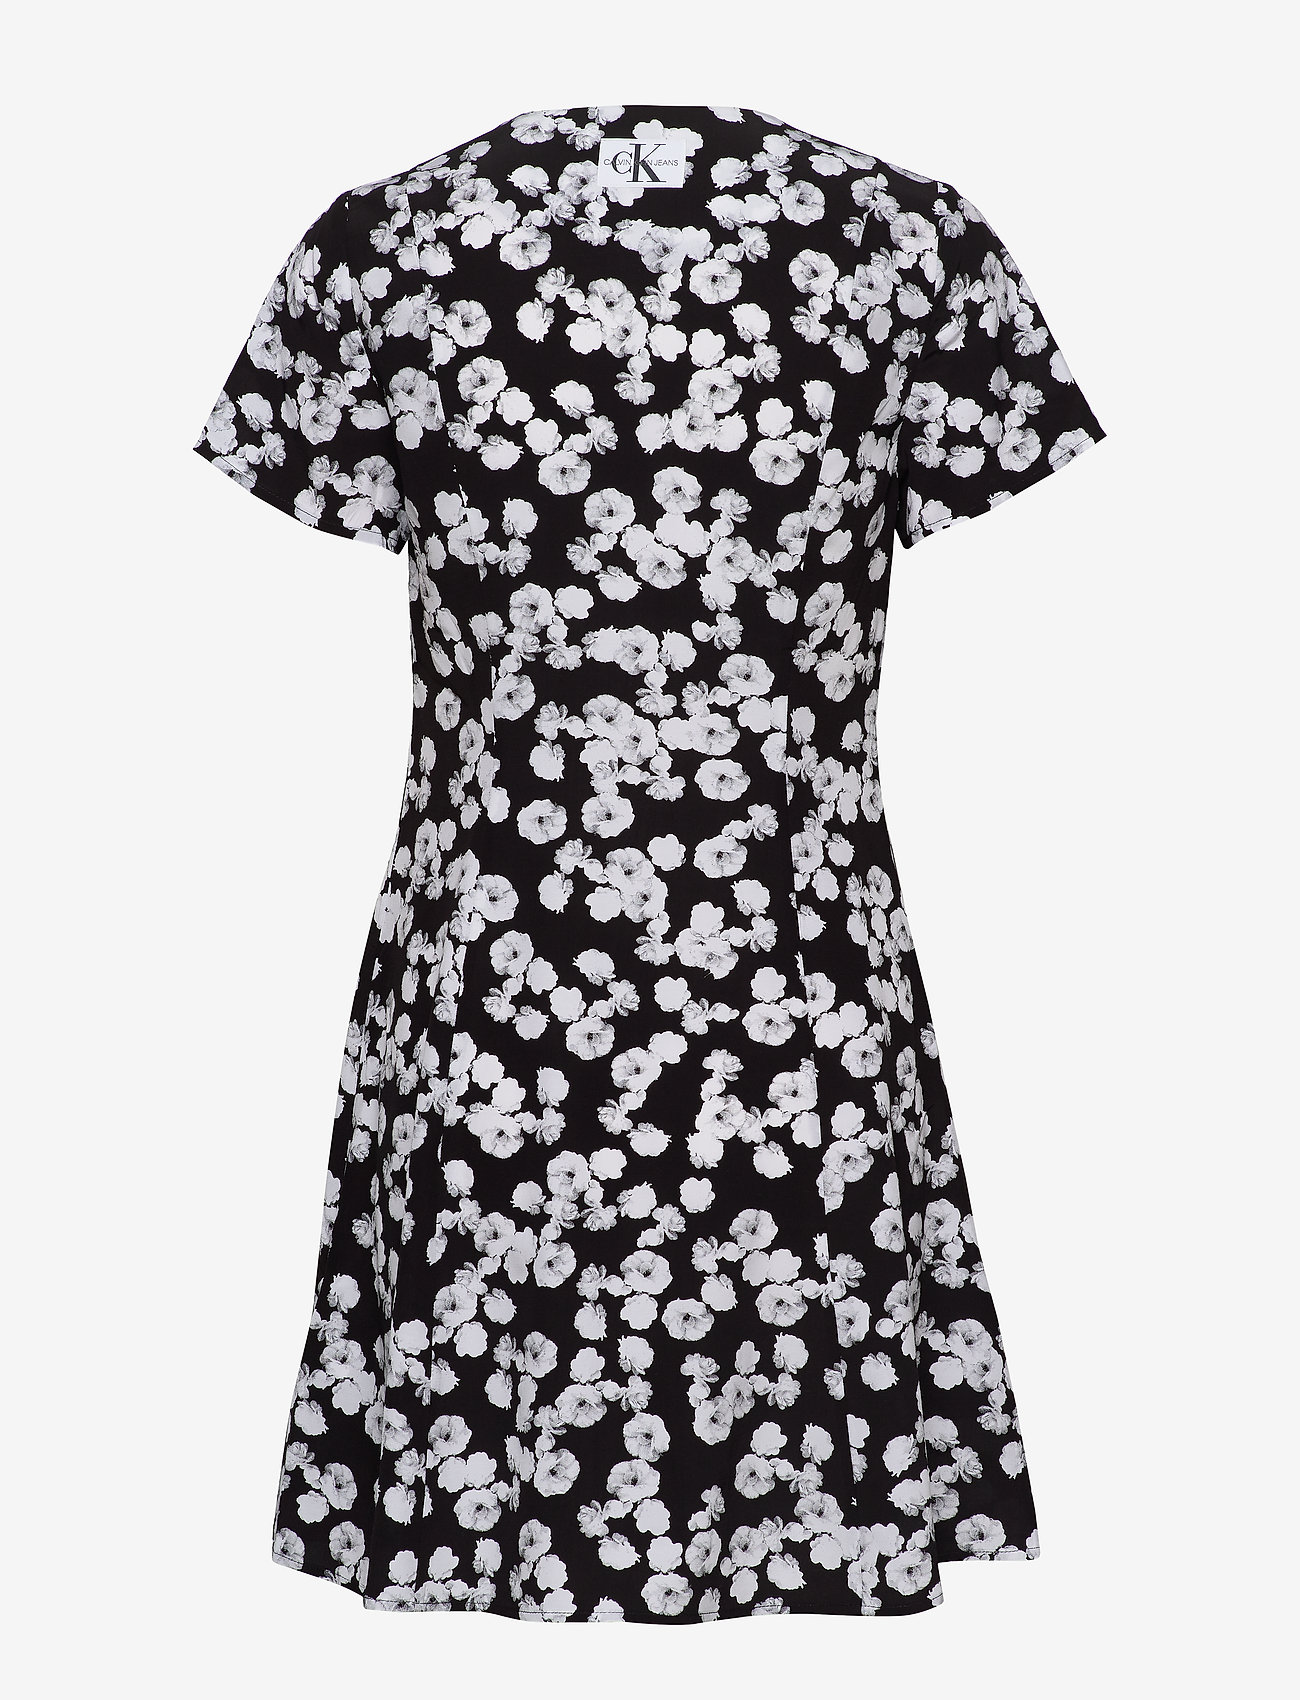 calvin klein black and white floral dress